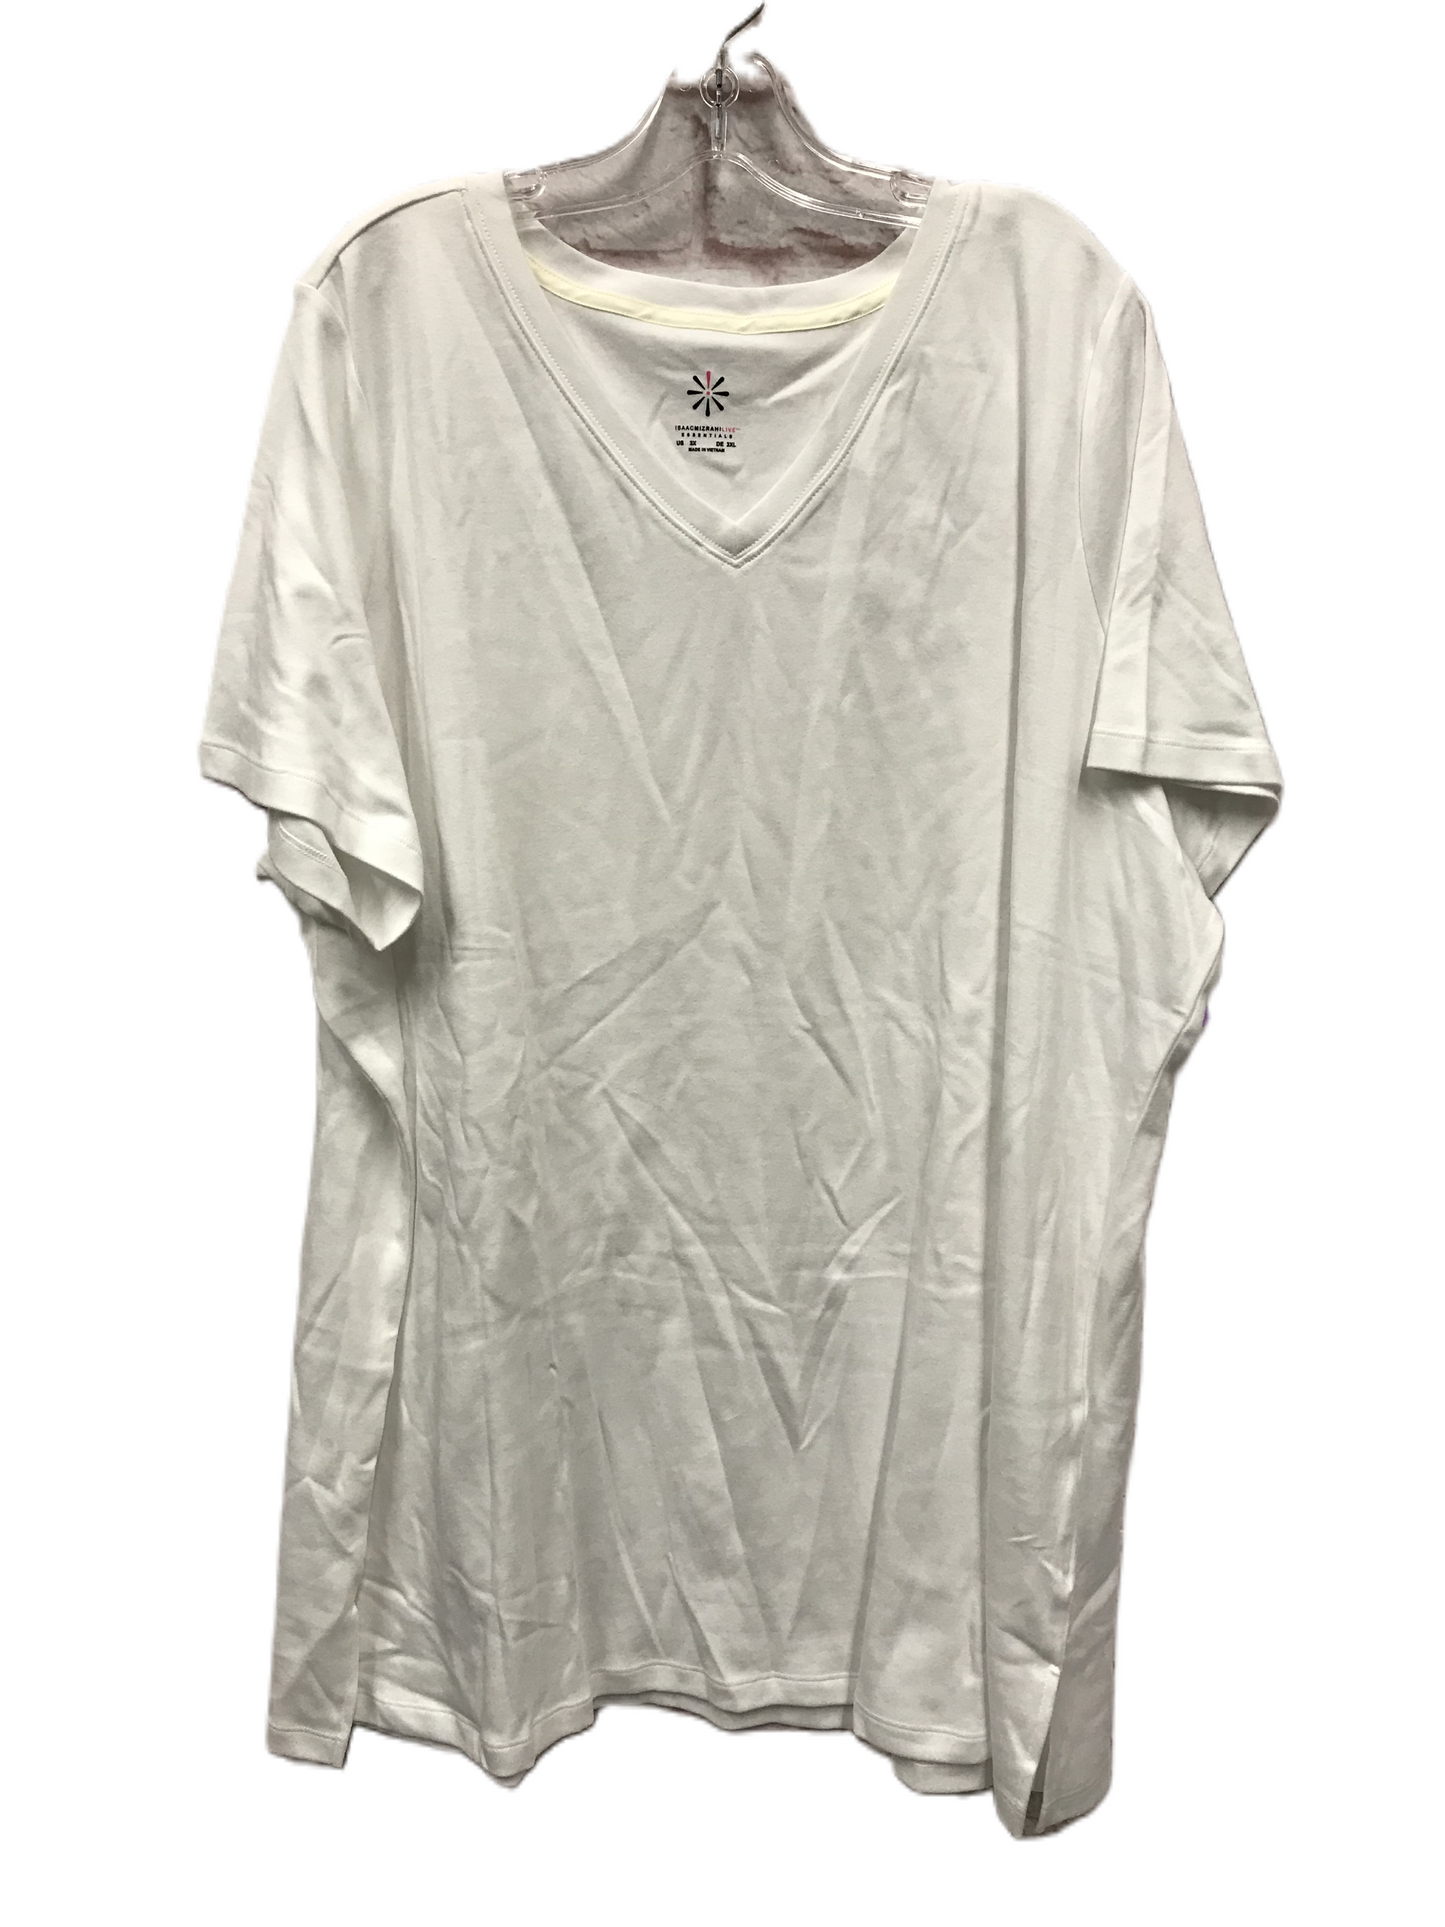 White Top Short Sleeve Basic By Isaac Mizrahi Live Qvc, Size: 3x